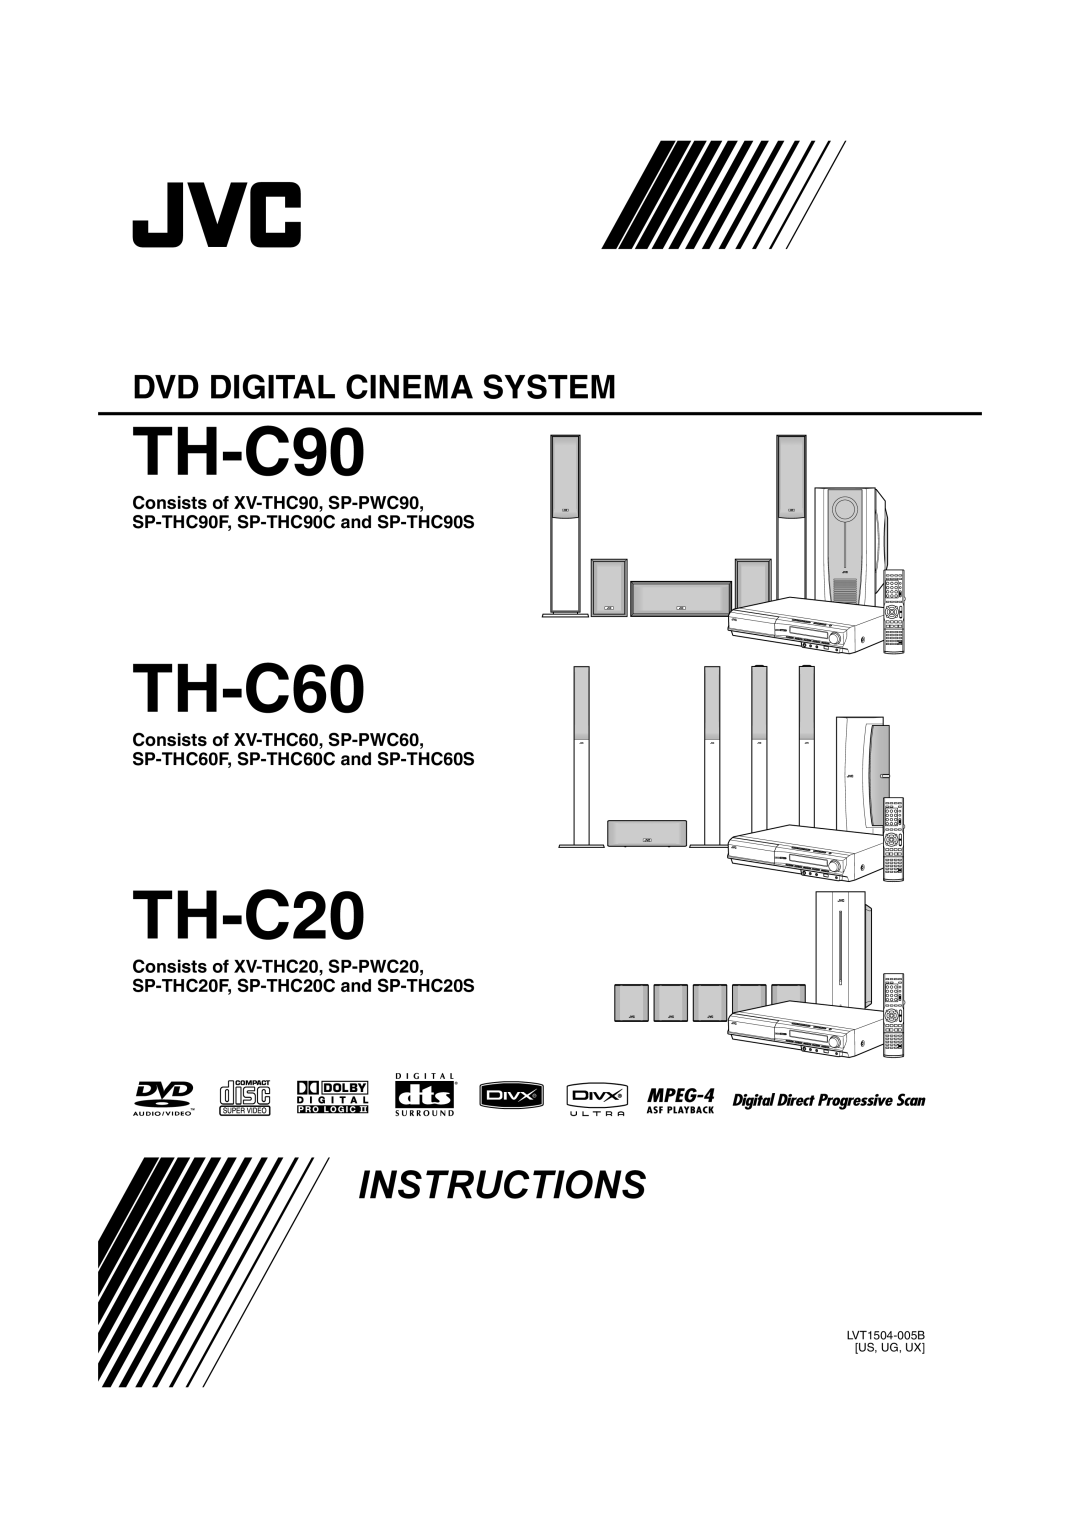 JVC LVT1504-005B manual TH-C90, TH-C60, TH-C20, Instructions, Dvd Digital Cinema System, Consists of XV-THC90, SP-PWC90 